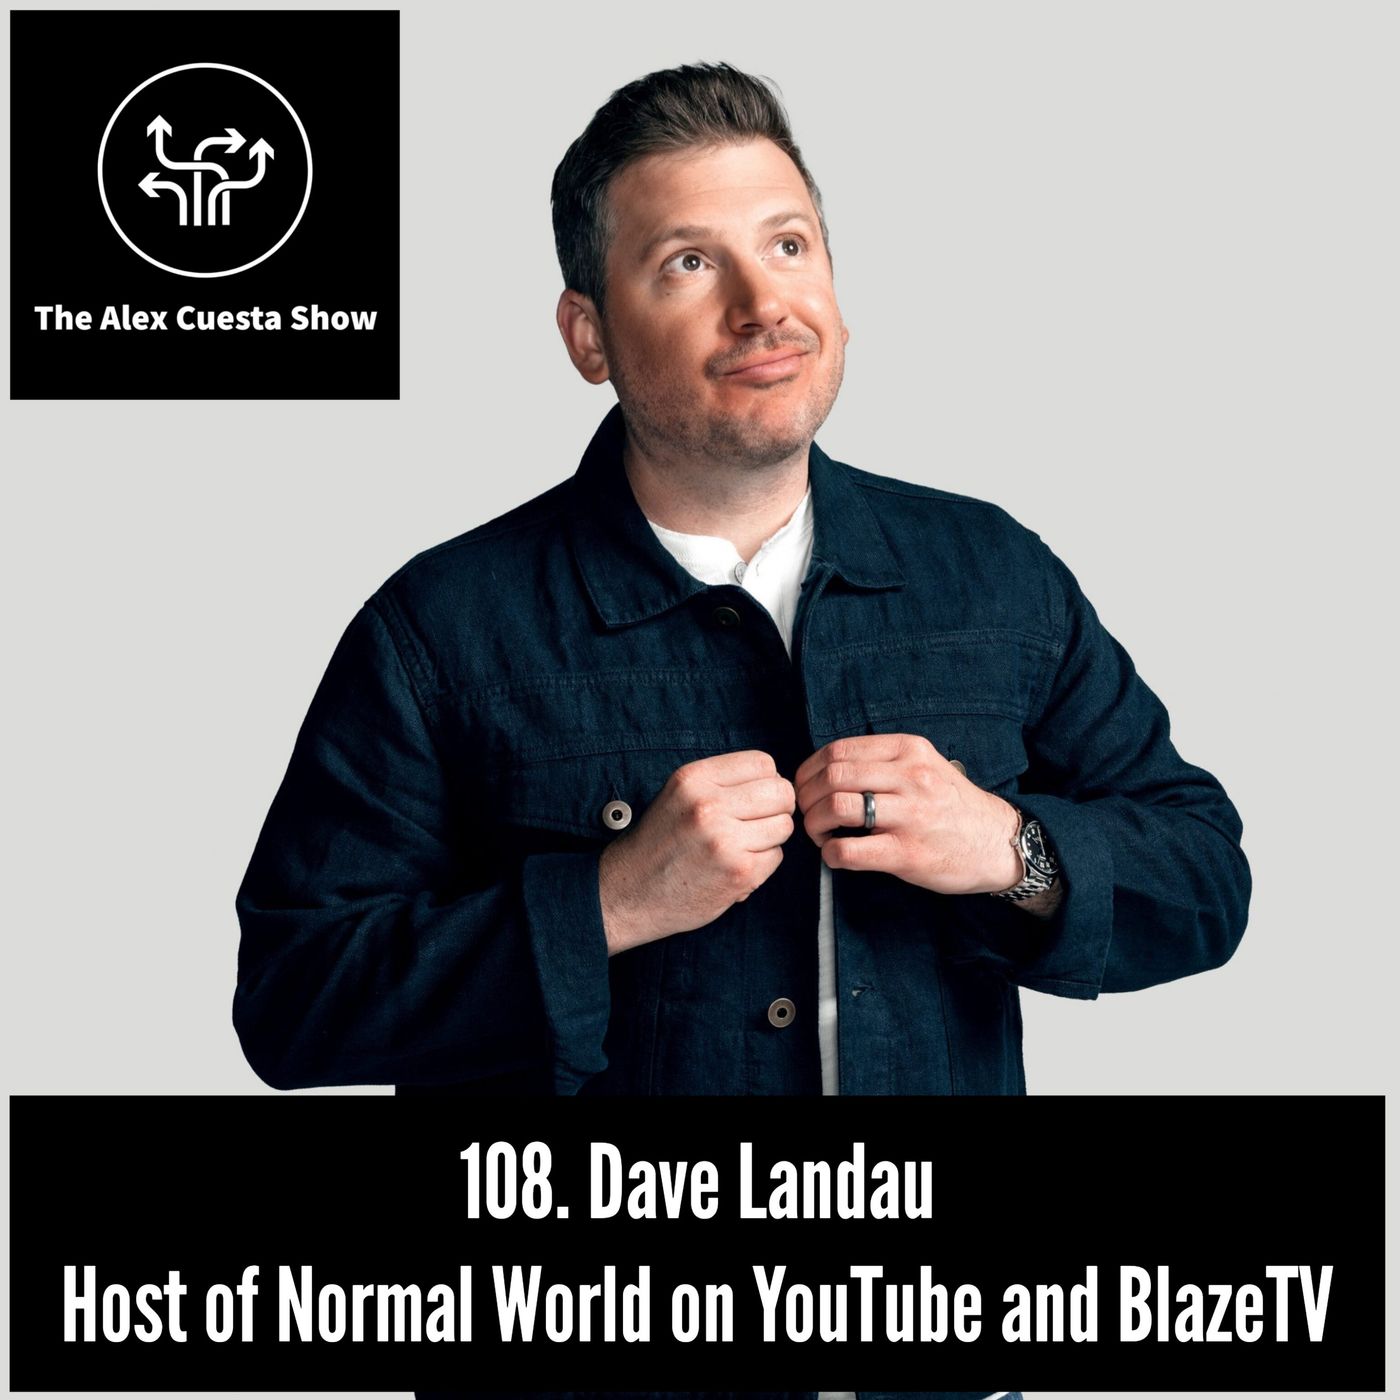 108. Dave Landau, Host of Normal World on YouTube and BlazeTV